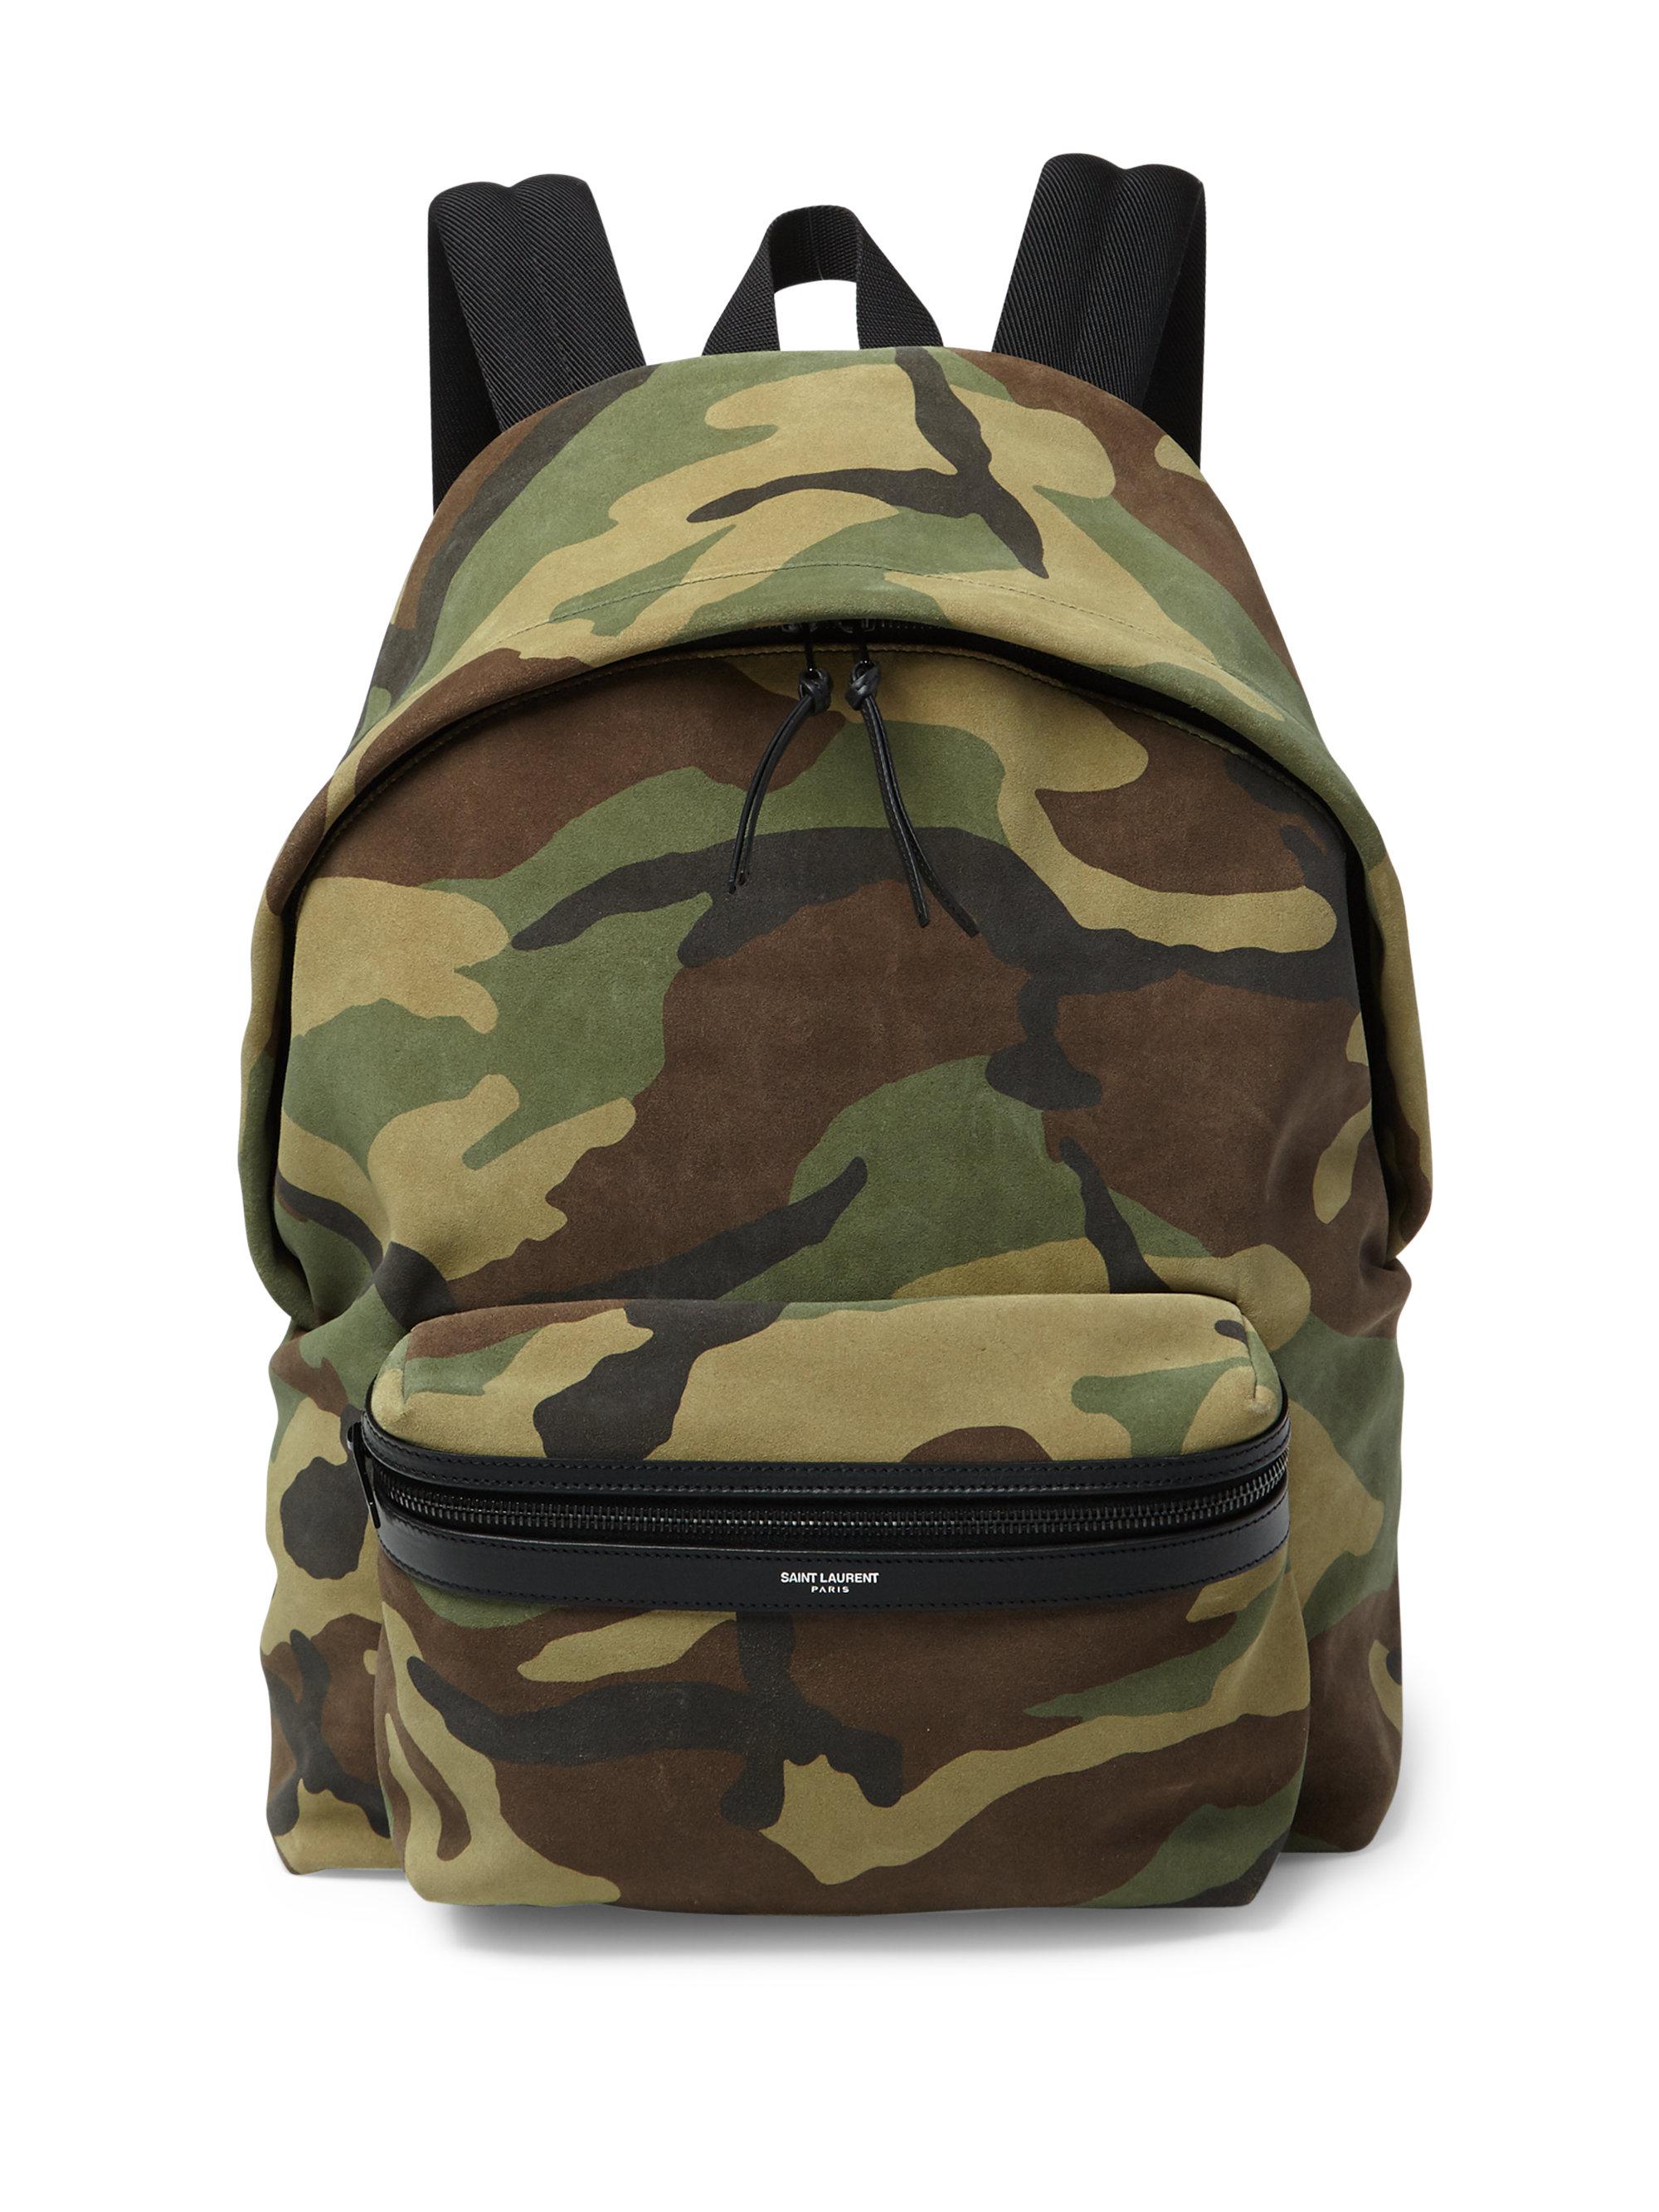 Saint Laurent Camouflage Hunting Backpack for Men - Lyst